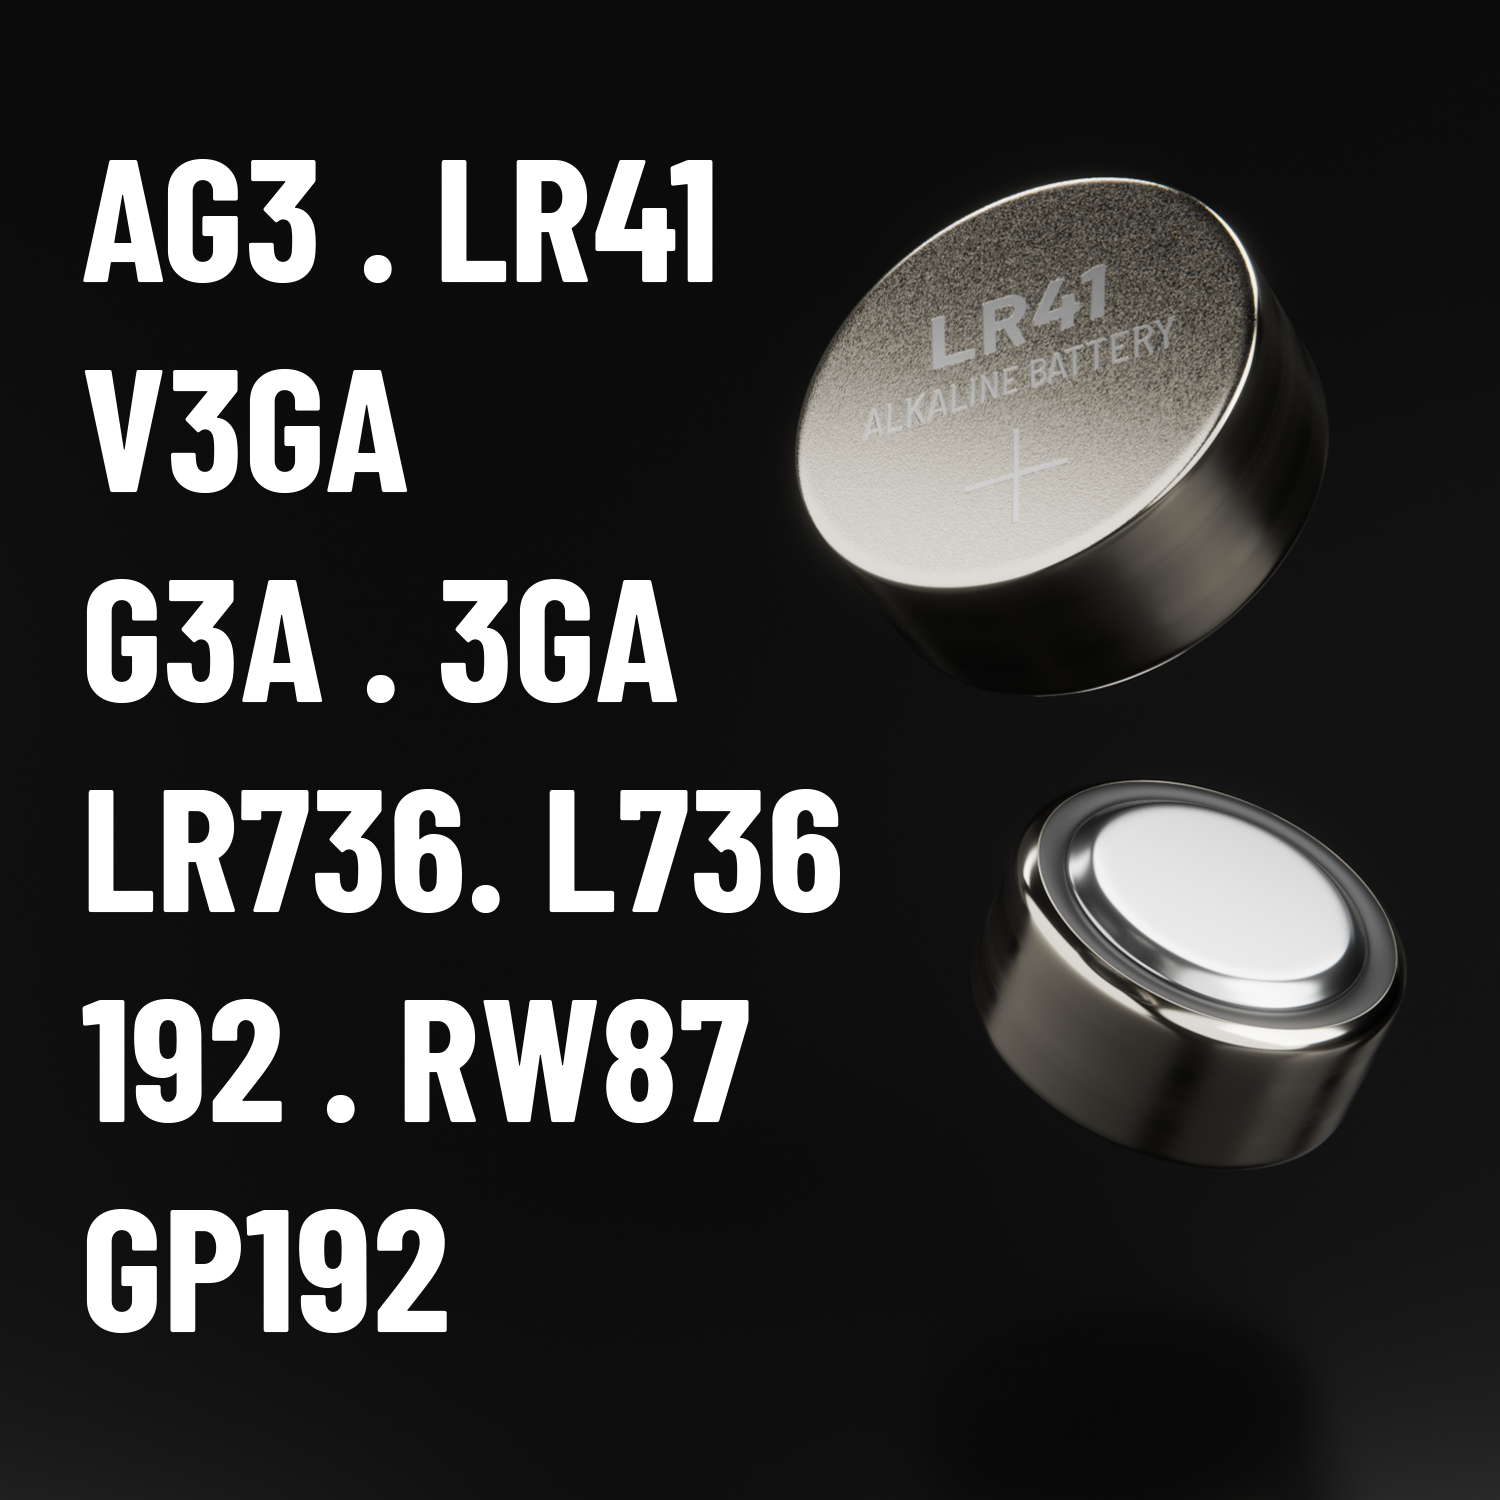 ABSINA AG3 LR41 AG3 Alkaline Knopfzelle